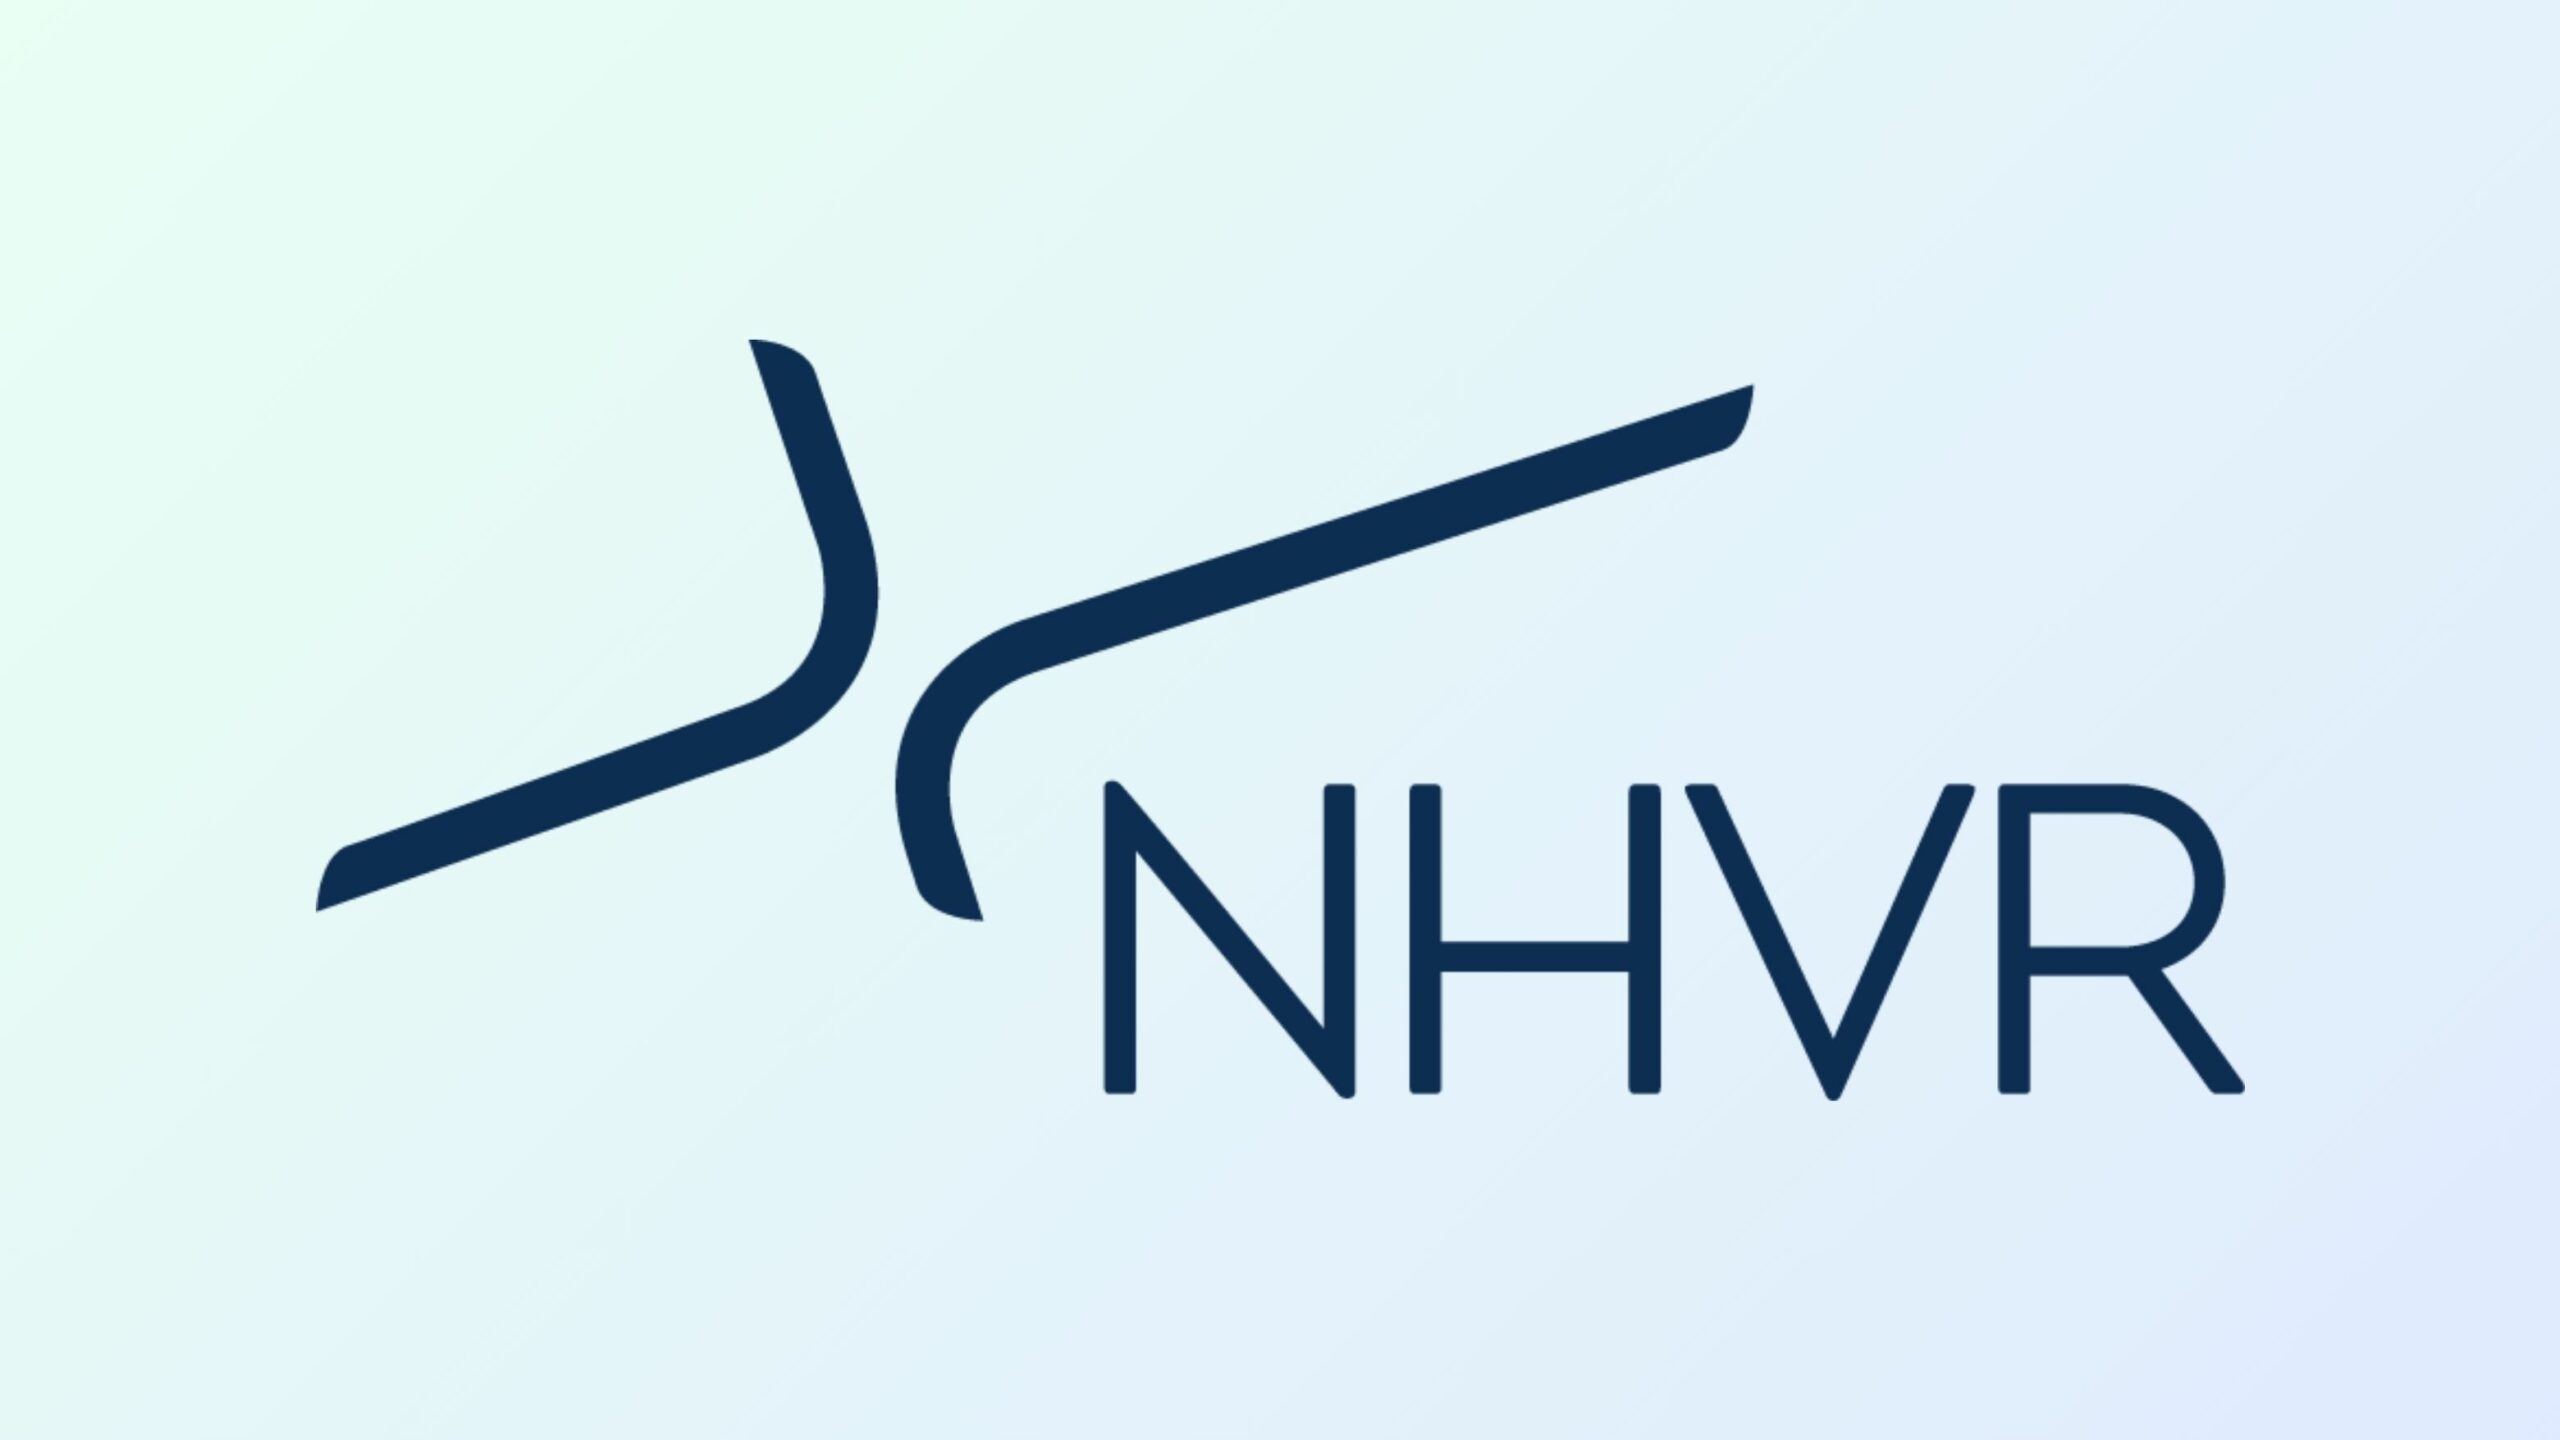 The official NHVR logo on a light-blue background.